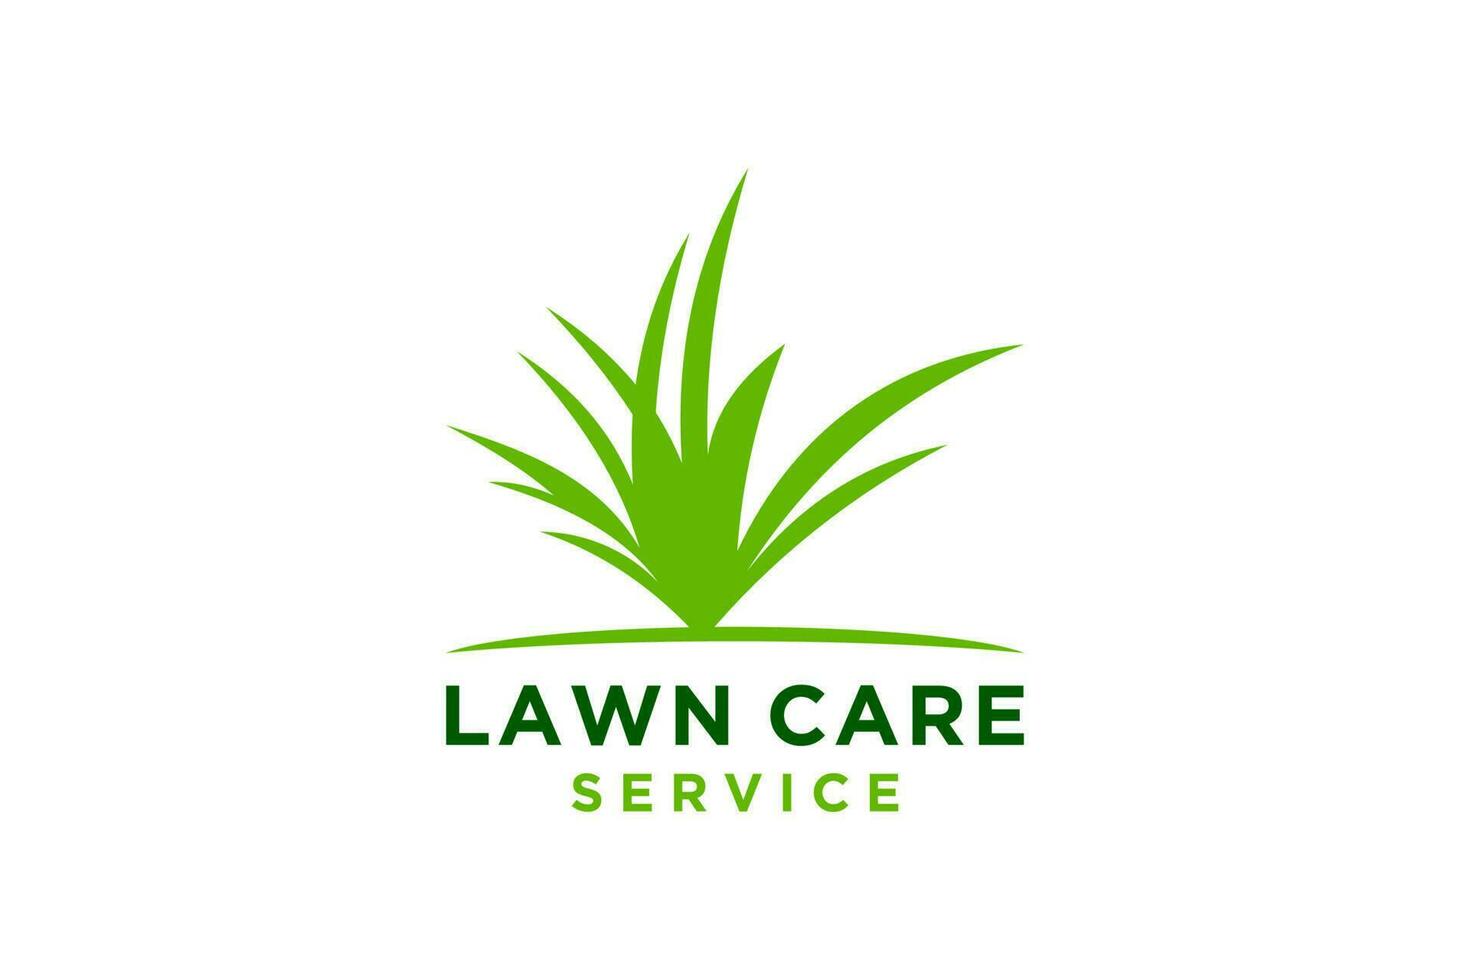 Illustration vector graphic of lawn care, landscape, grass concept logo design template.